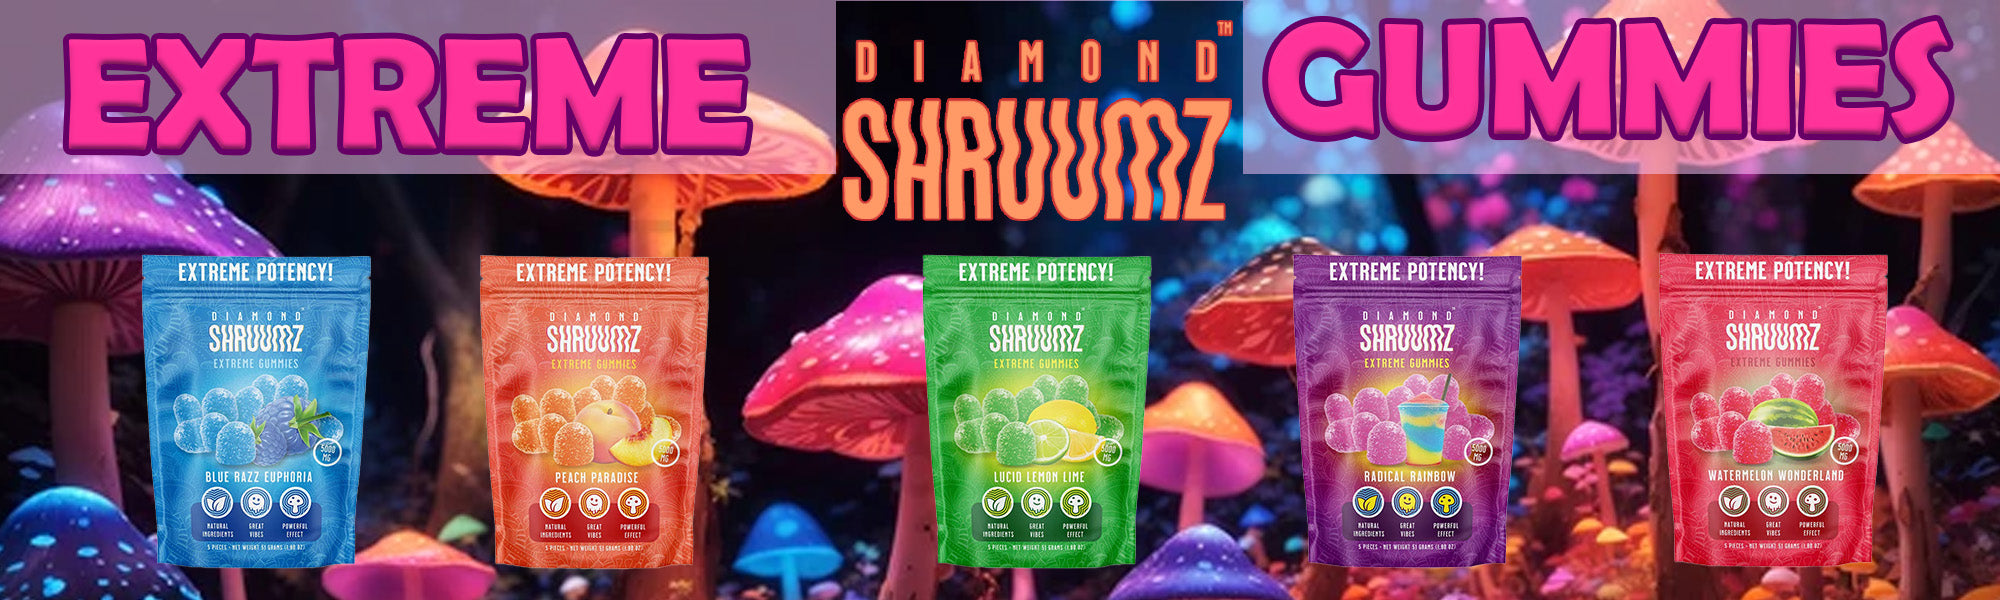 Diamond Shruumz Extreme 5000mg Mushroom Nootropic Gummies